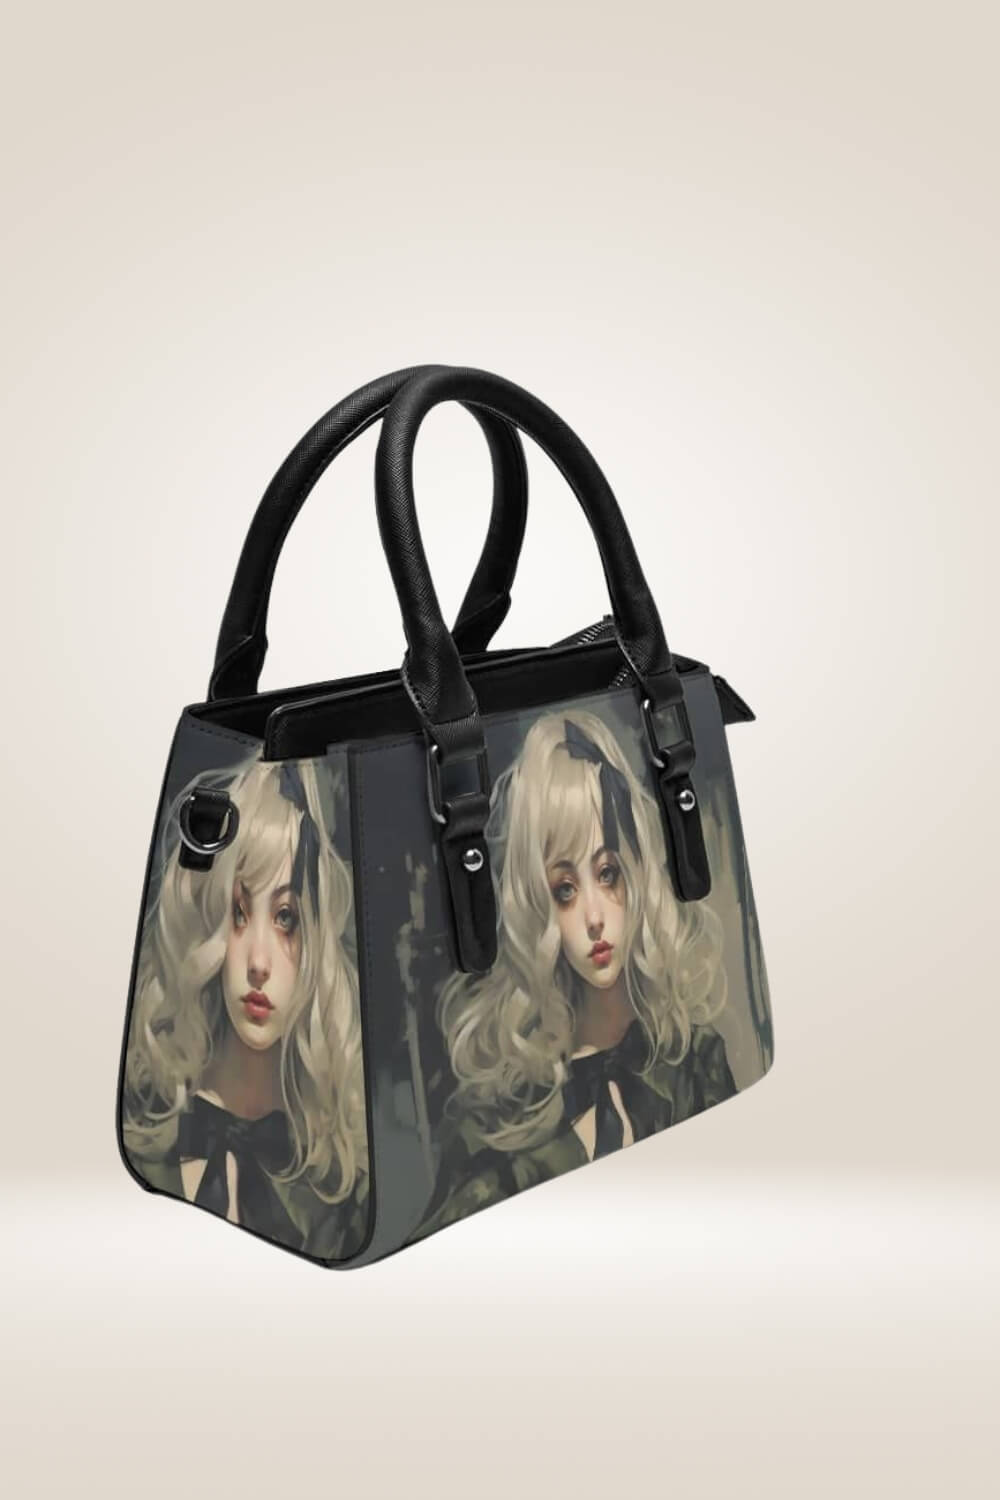 Girl With A Bow Black Satchel Bag - TGC Boutique - Satchel Handbag